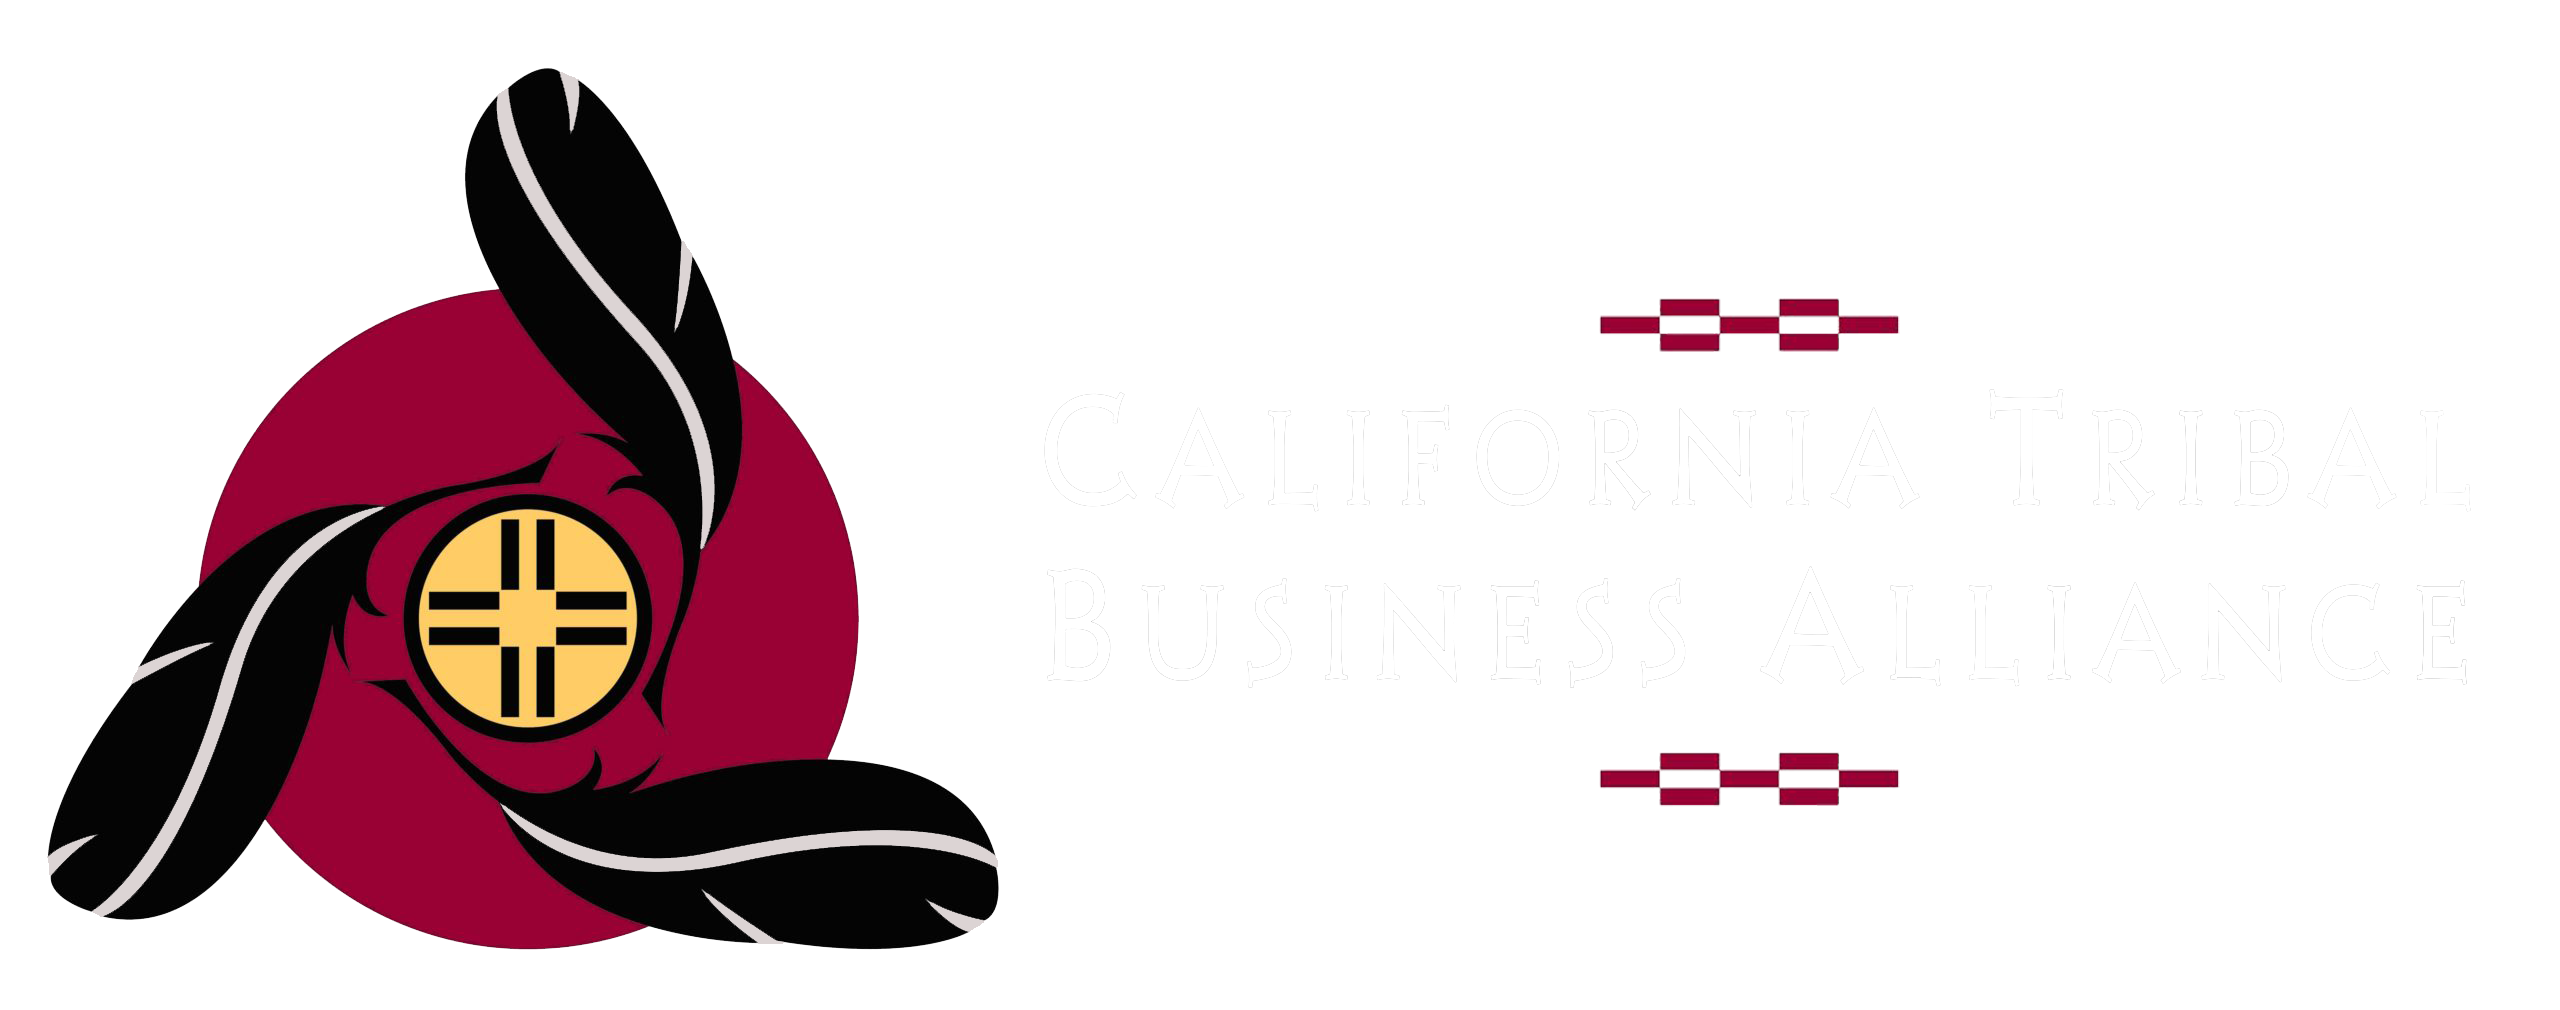 California Tribal Business Alliance